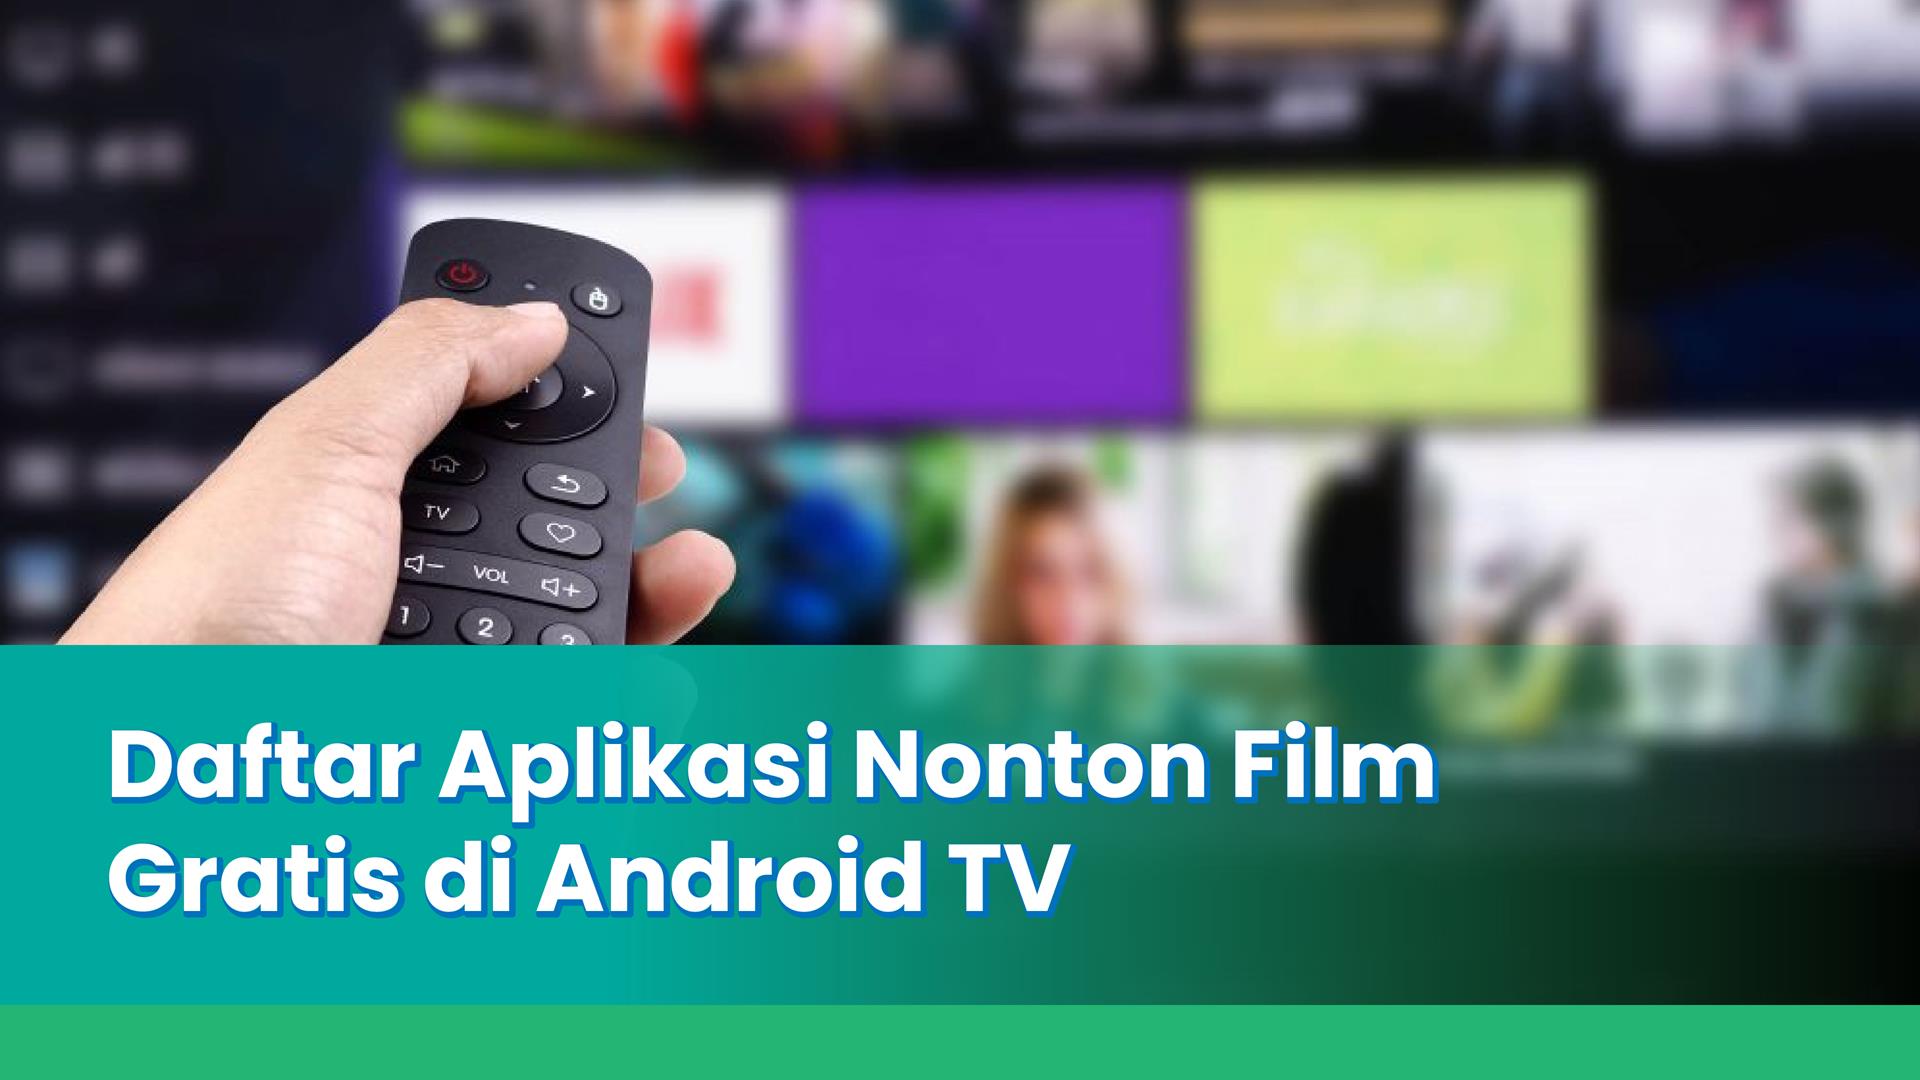 Aplikasi nonton film gratis di Android TV